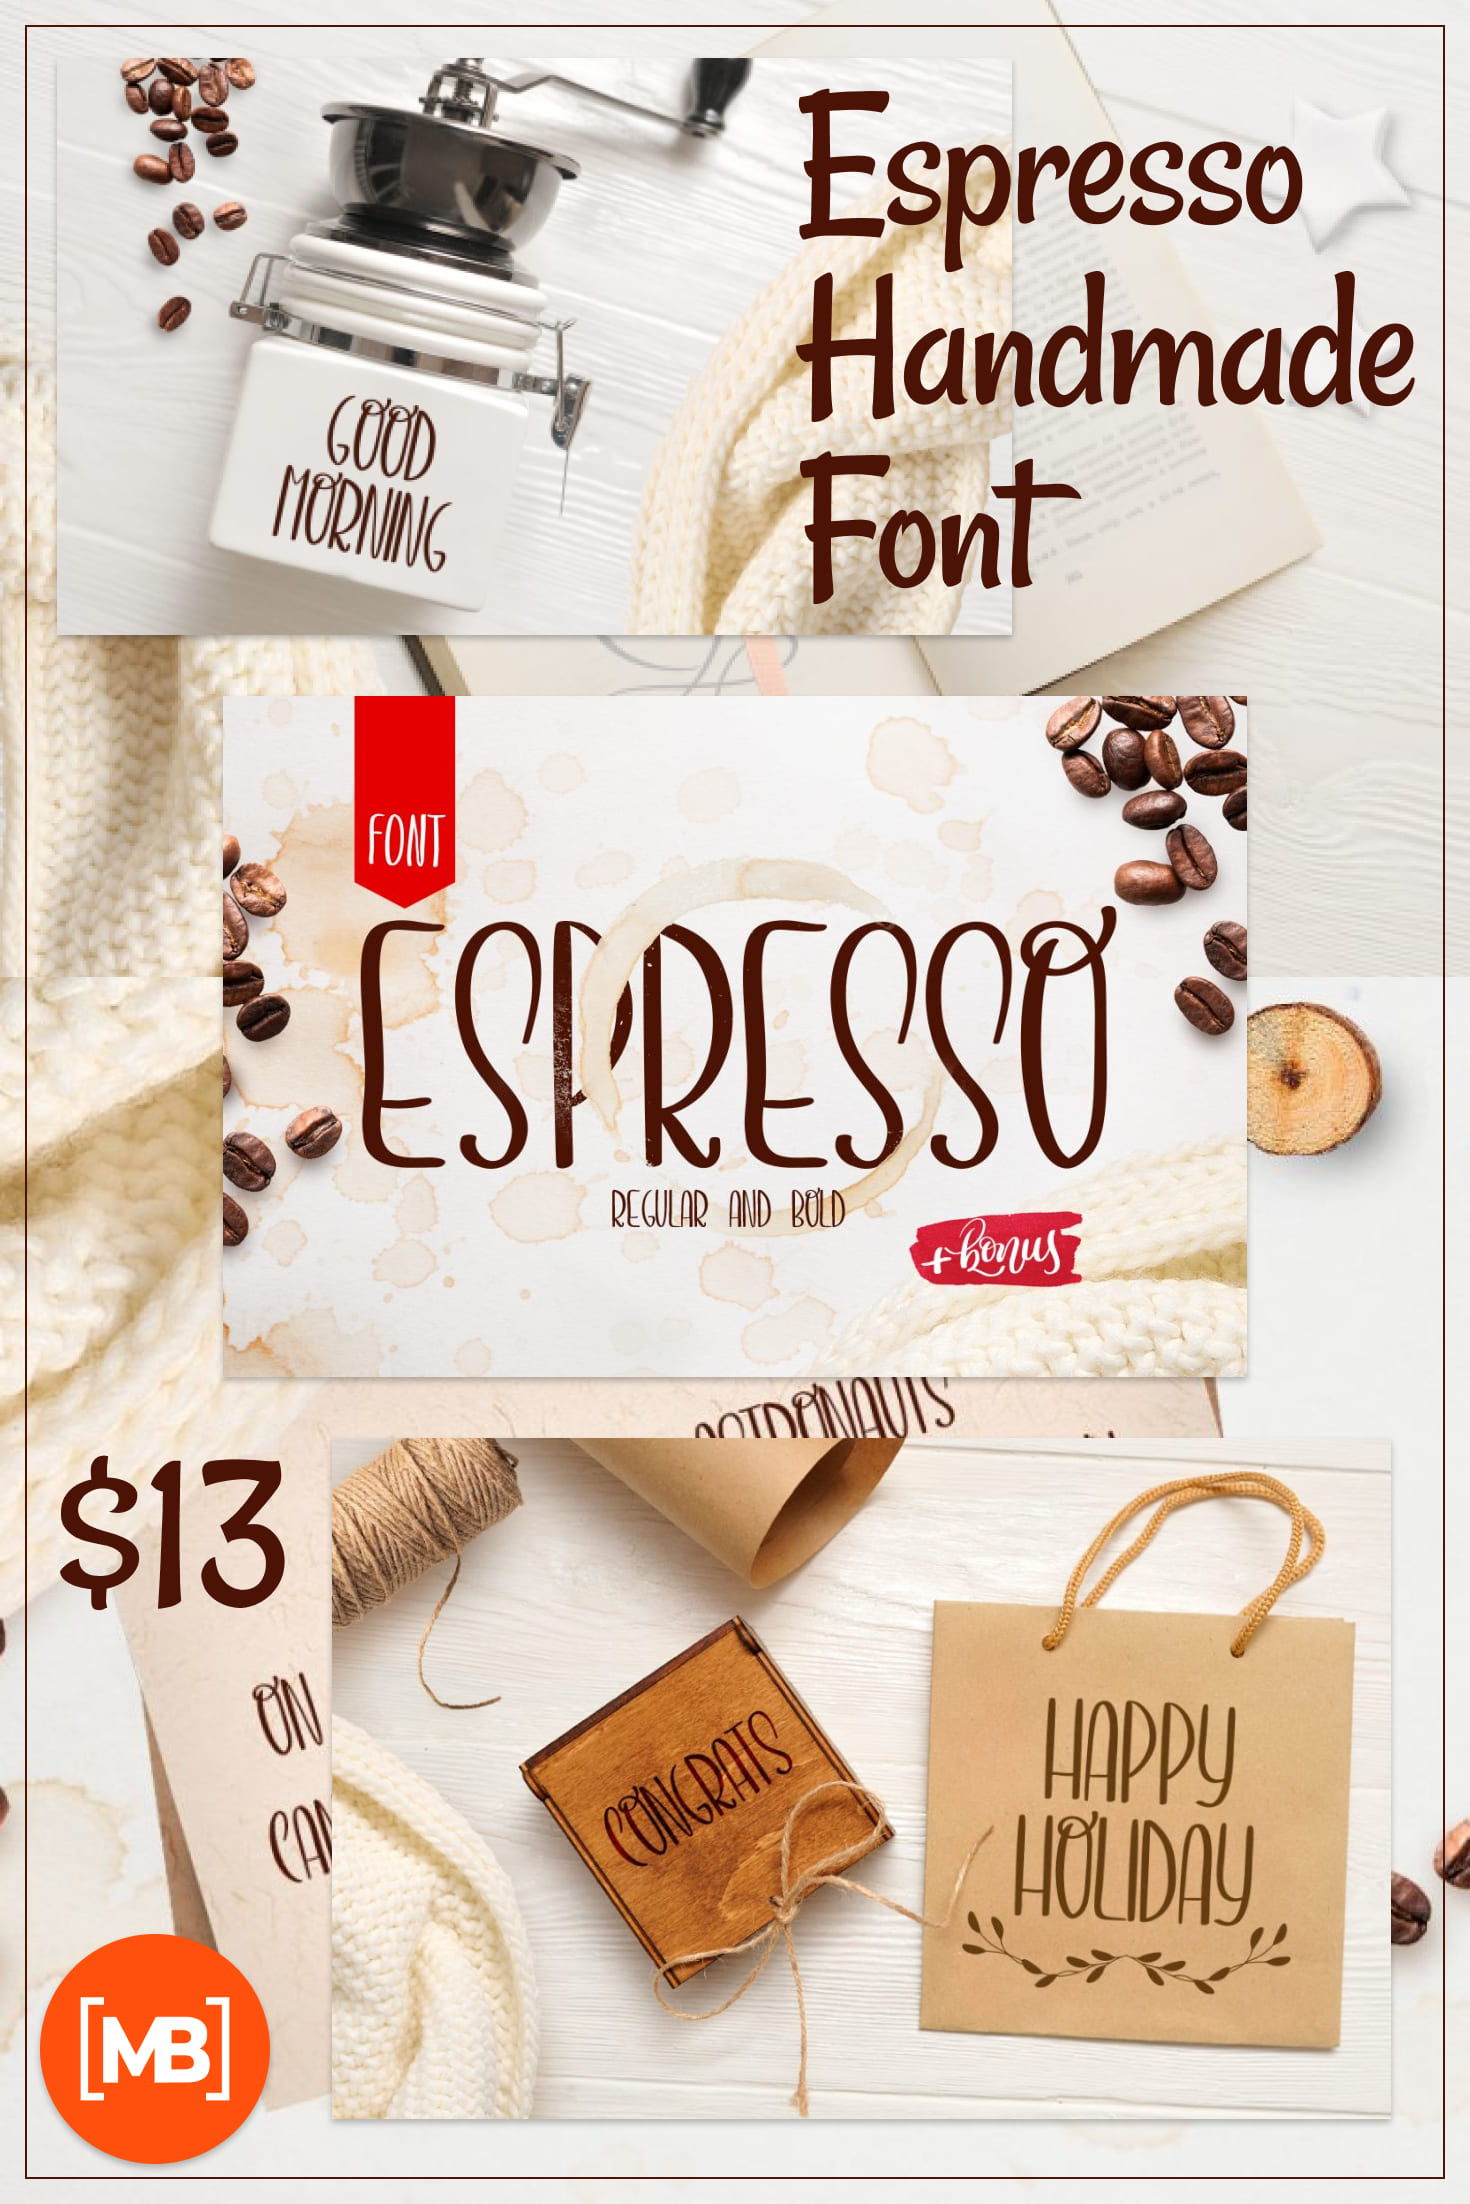 Pinterest Image: Espresso Handmade Font - $13.